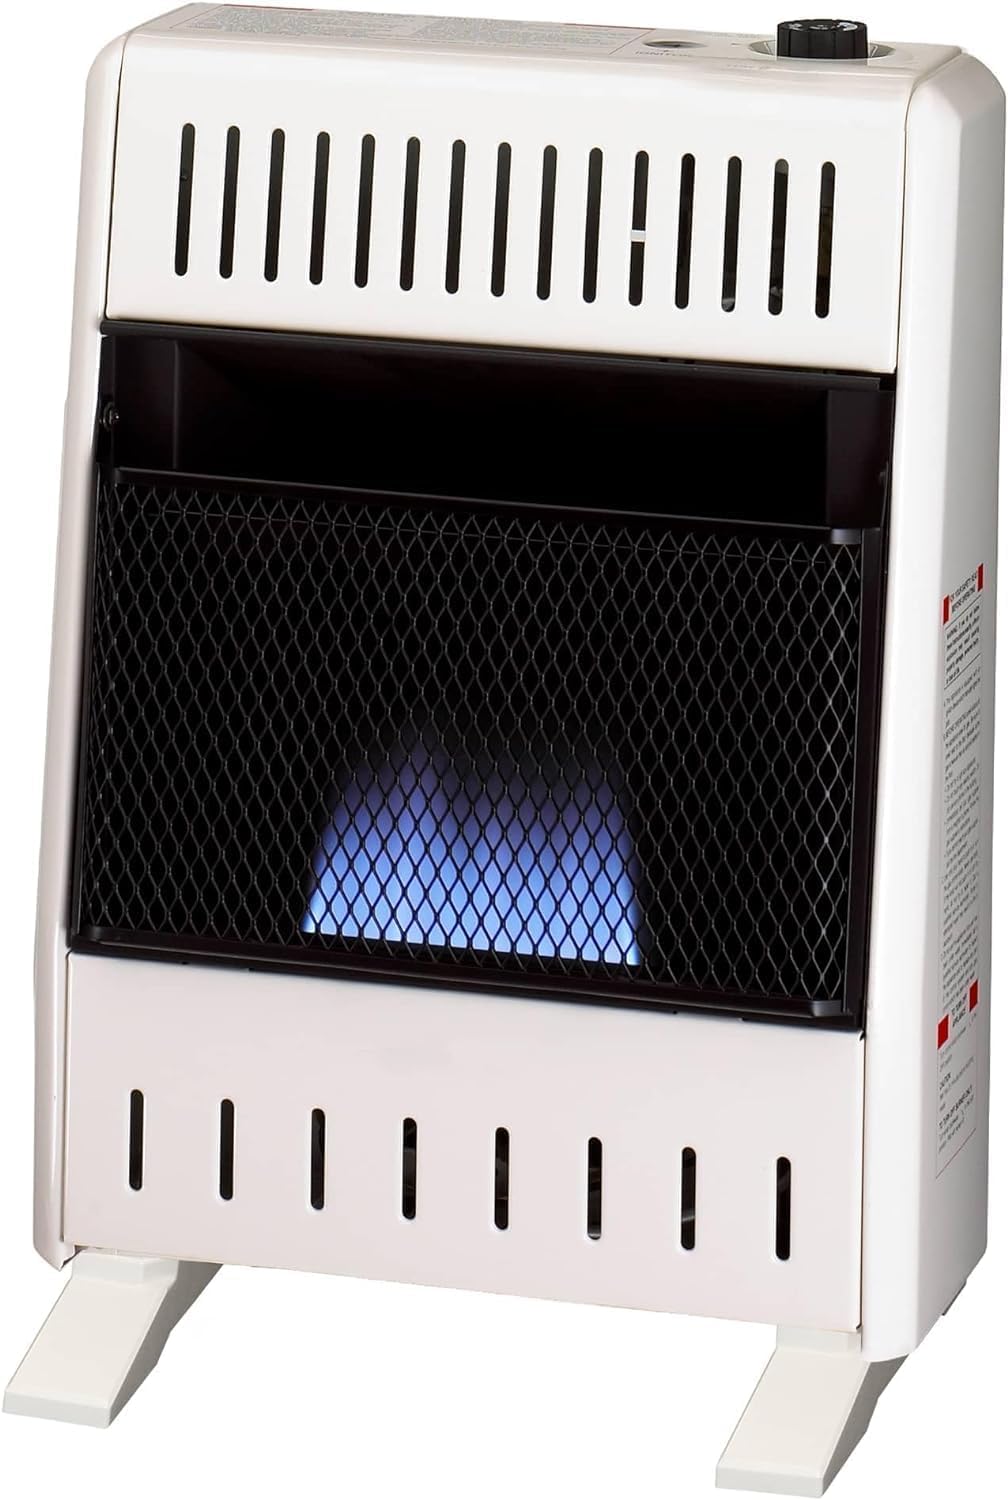 ProCom ML100TBA-B Ventless Propane Gas Blue Flame Space Heater Review